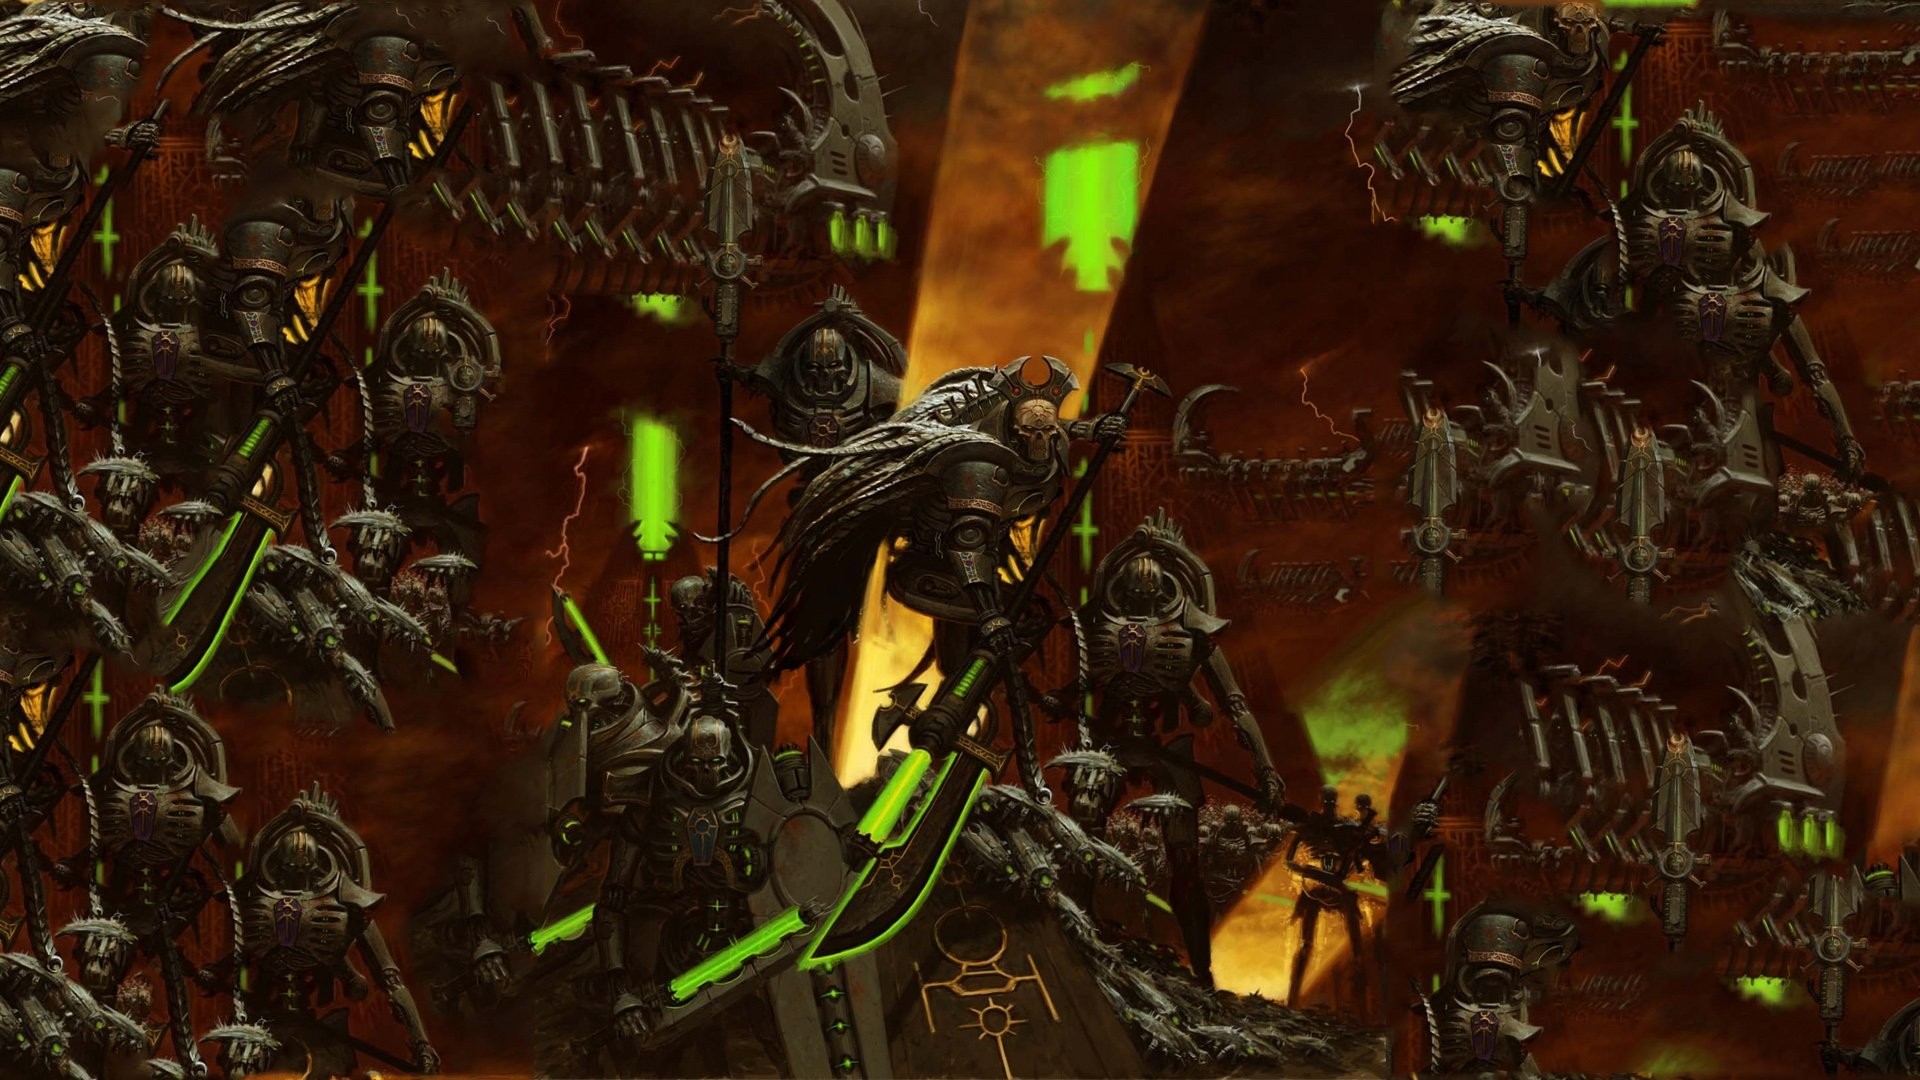 1920x1080 Necron - Warhammer 40,000 wallpaper - Game wallpapers - #28528